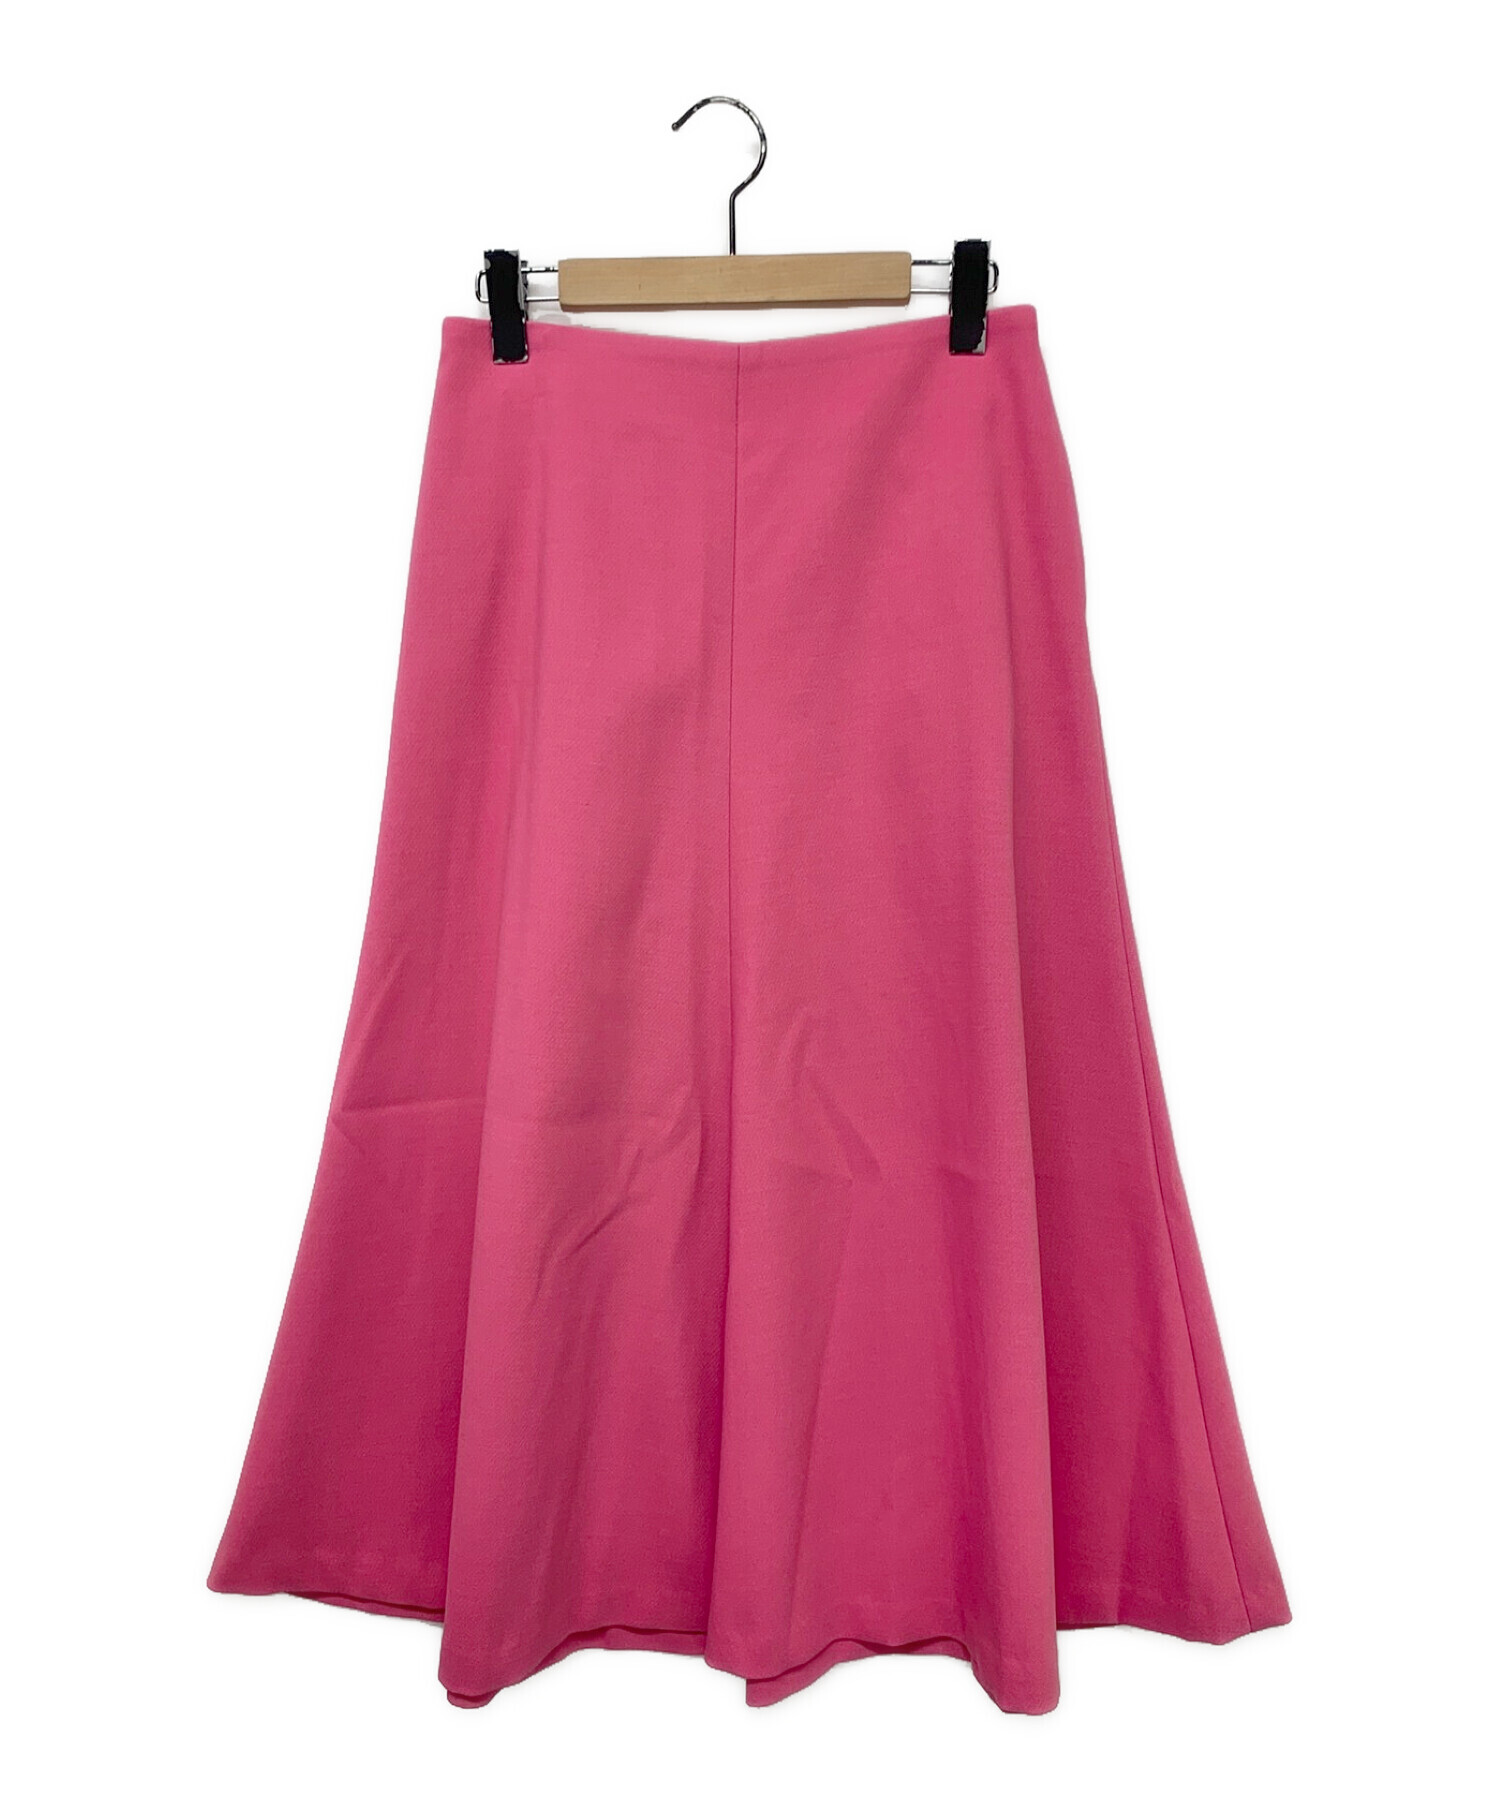 ESTNATION (エストネーション) ダブルクロスフレアミディスカート ピンク サイズ:38